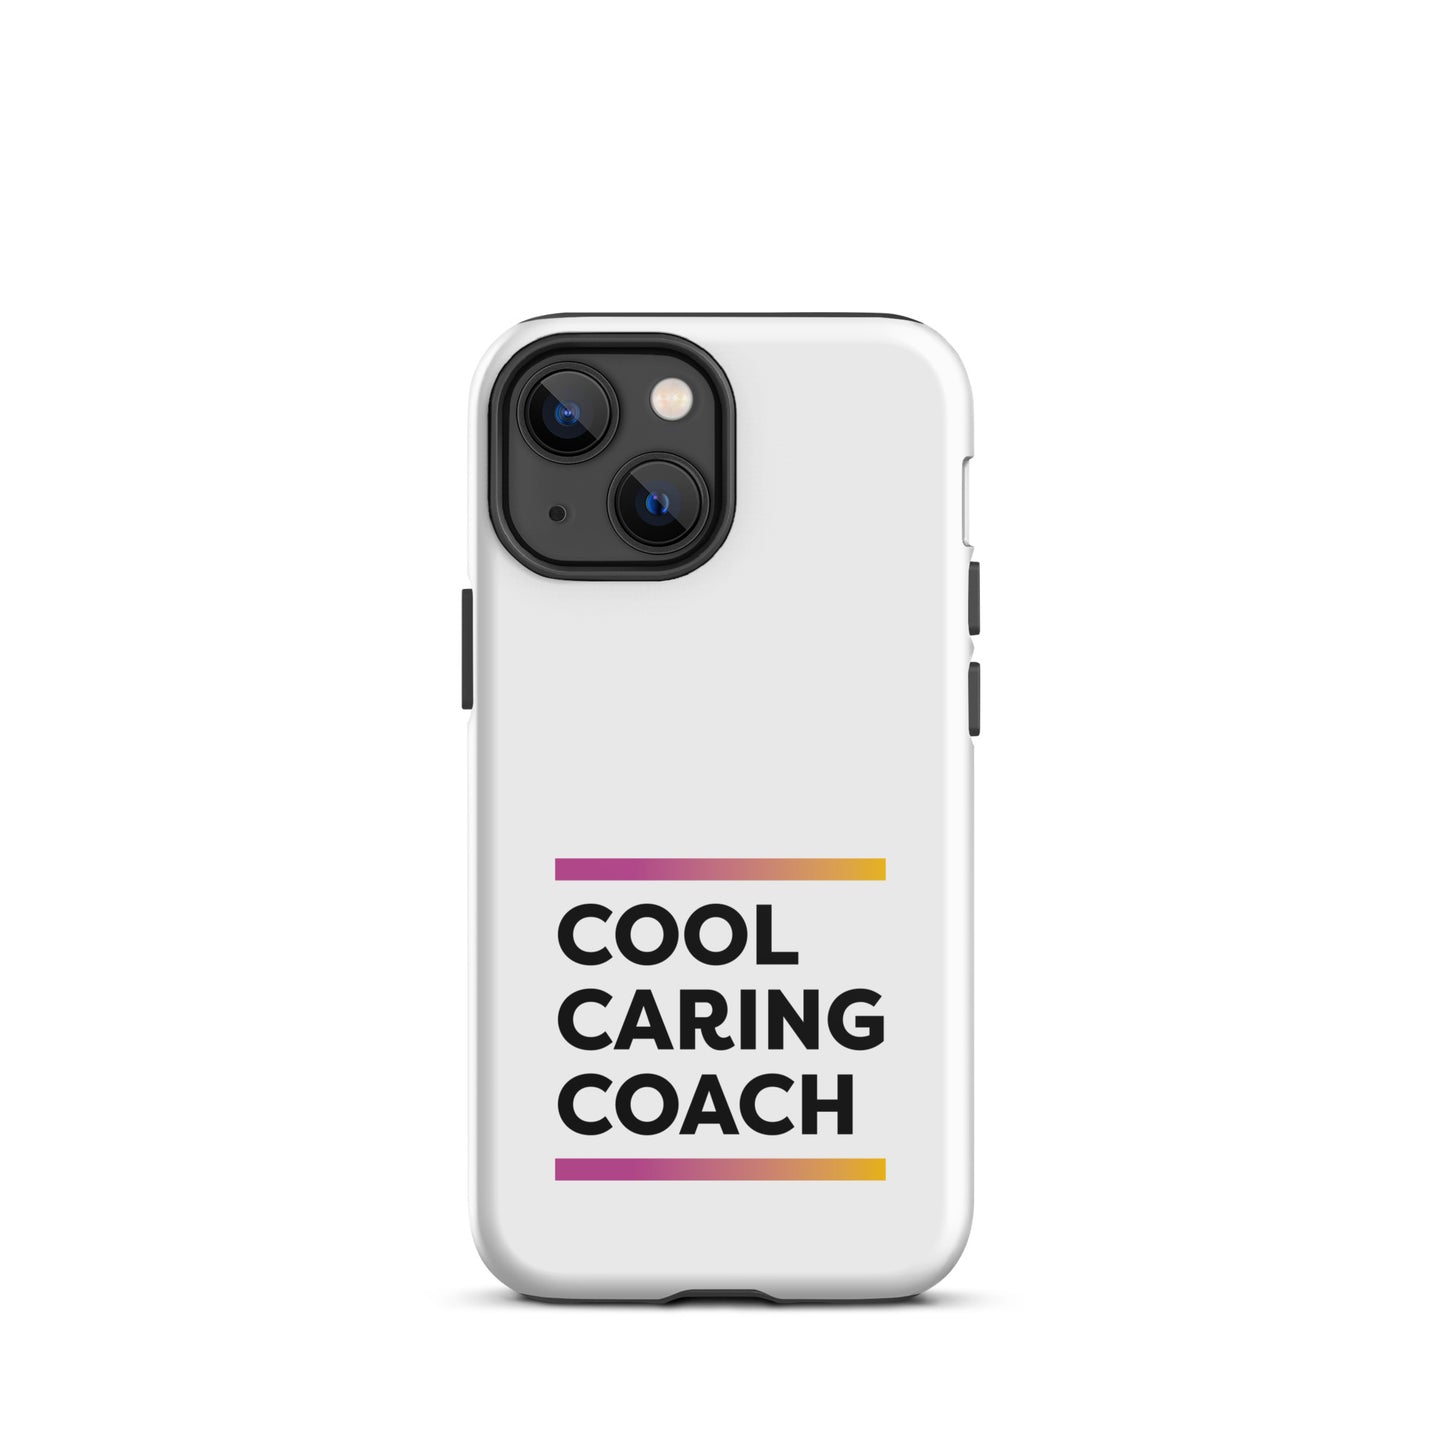 Cool Caring Coach iPhone case